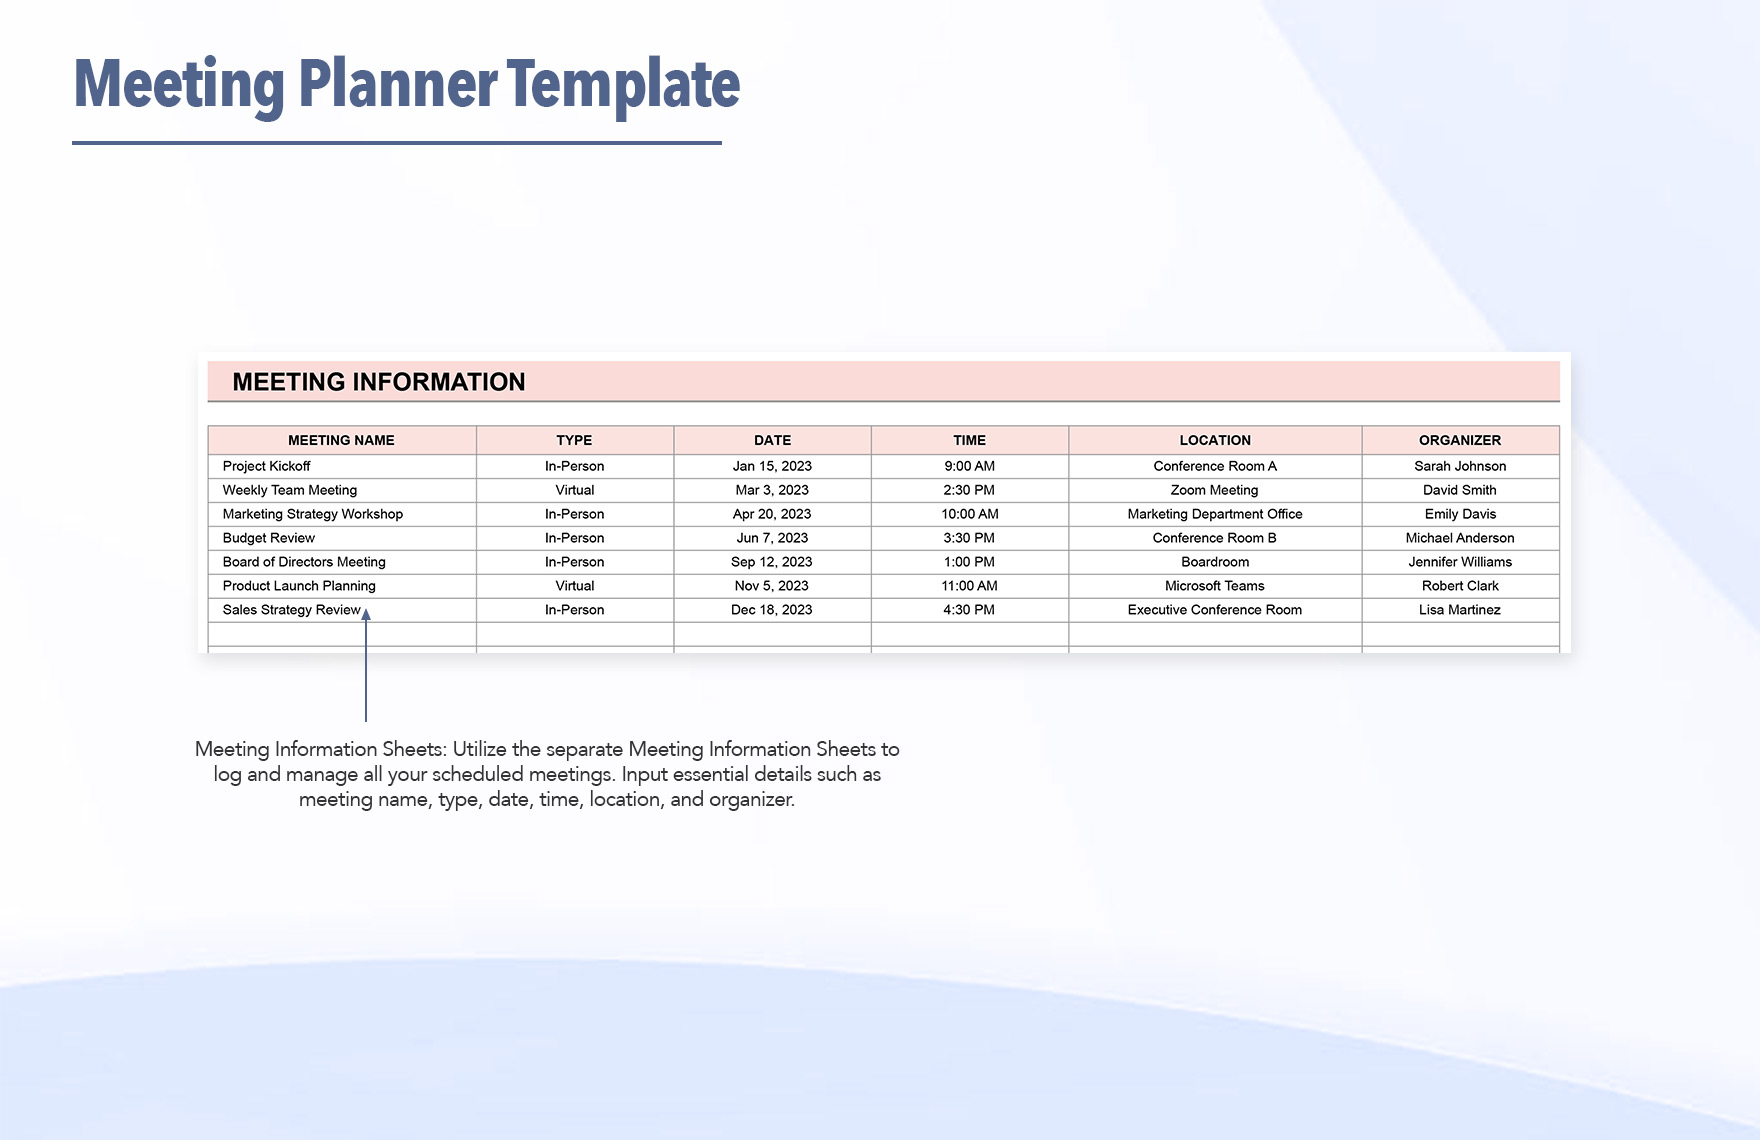 Meeting Planner Template